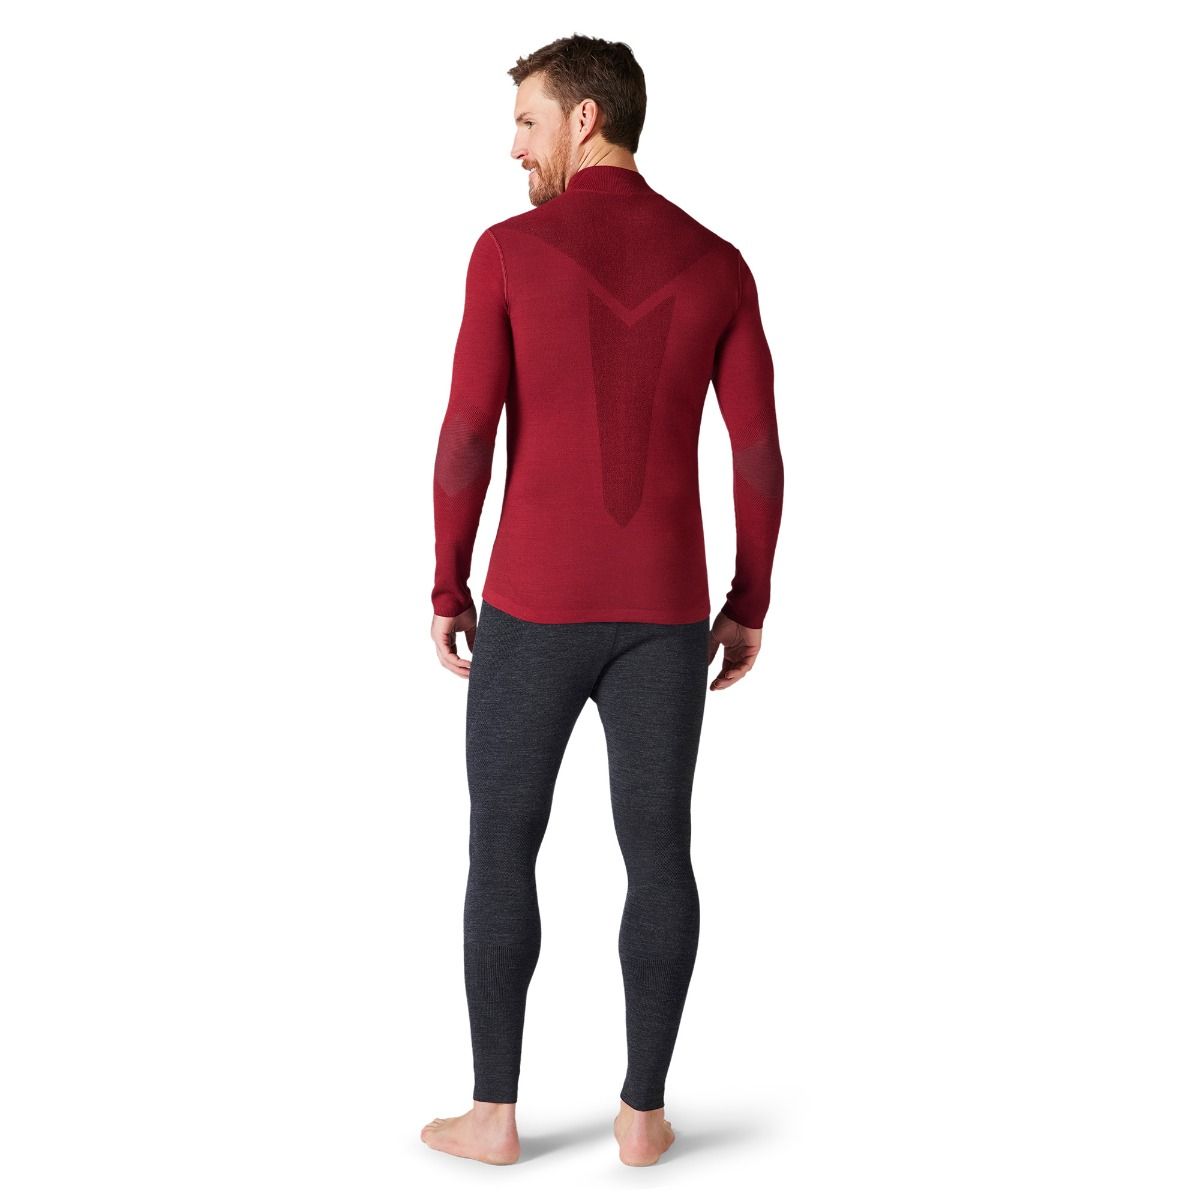 Point6 – Men's Base Layer Long Sleeve Mid 1/4 Zip Top – Merino Wool – Tan